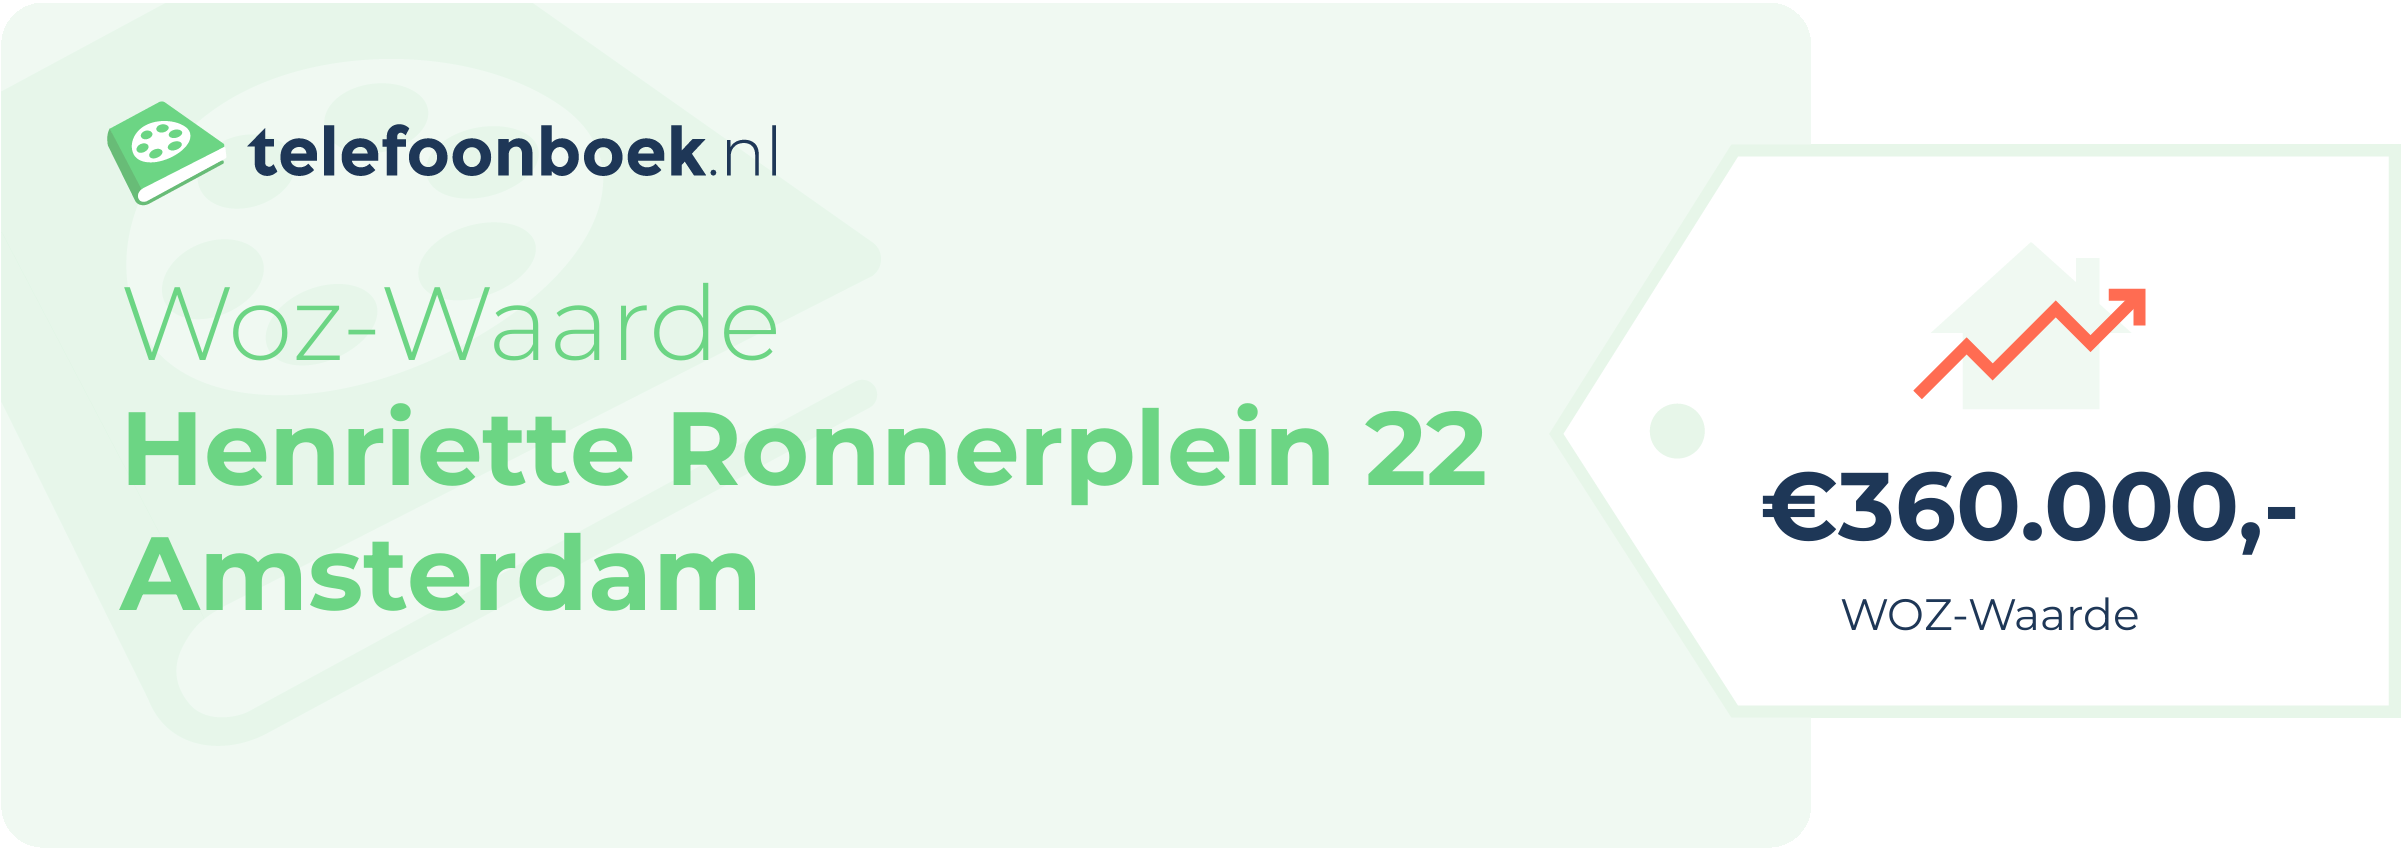 WOZ-waarde Henriette Ronnerplein 22 Amsterdam